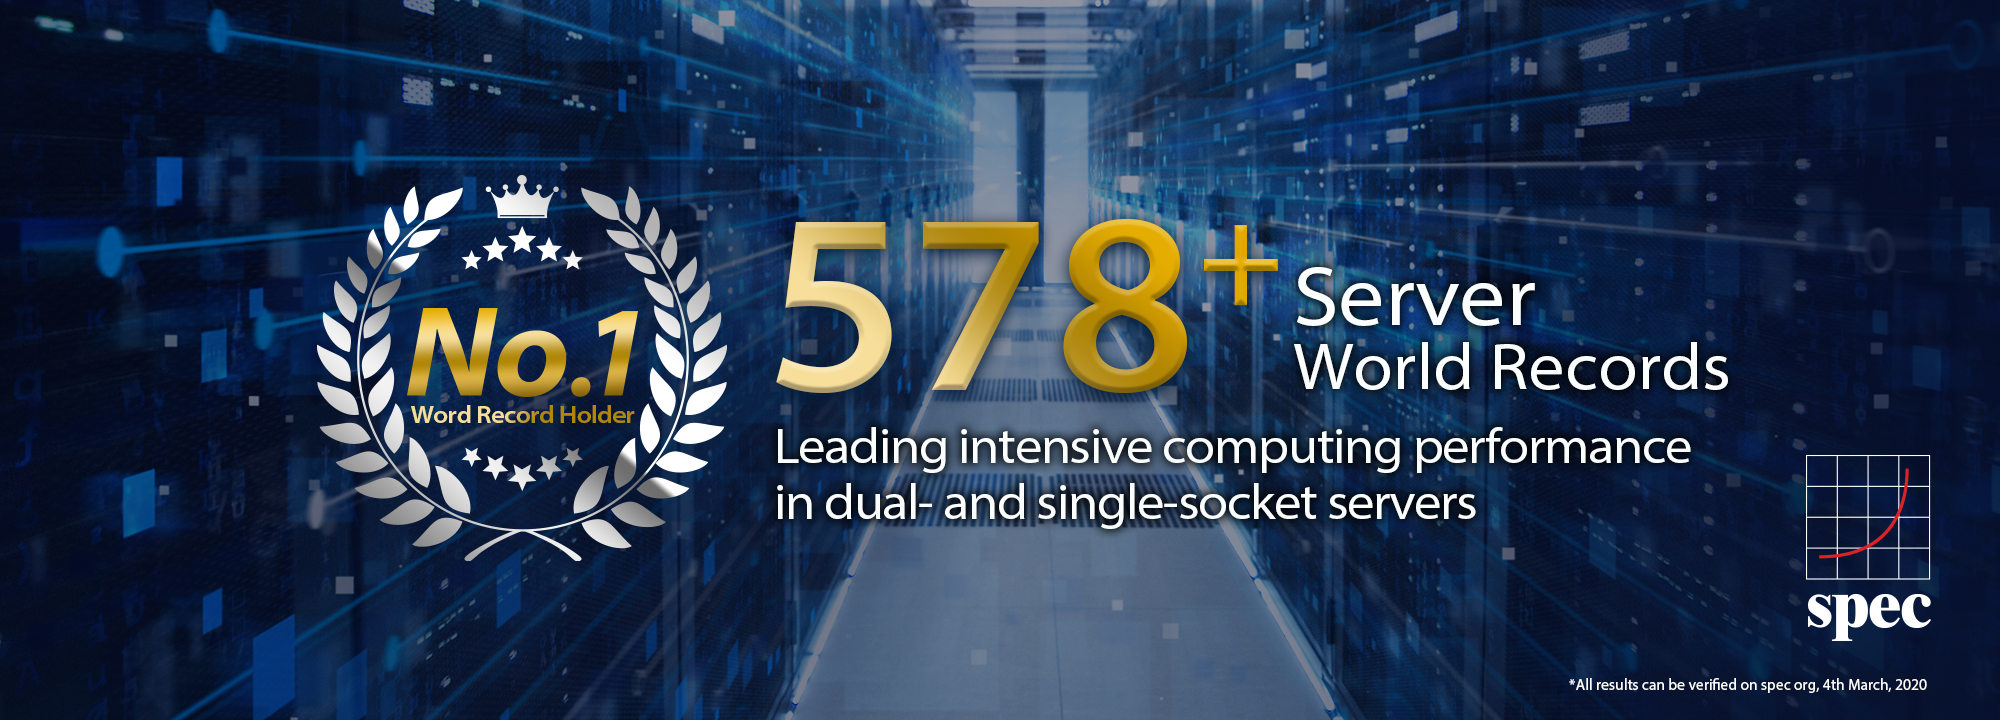 asus server 578 world records asus site banner เอซุสสร้างสถิตโลกสำหรับประสิทธิภาพของเซิร์ฟเวอร์ทั้งในแบบ Single Socket และ Dual Socket จากเว็ปไซต์ SPEC.org